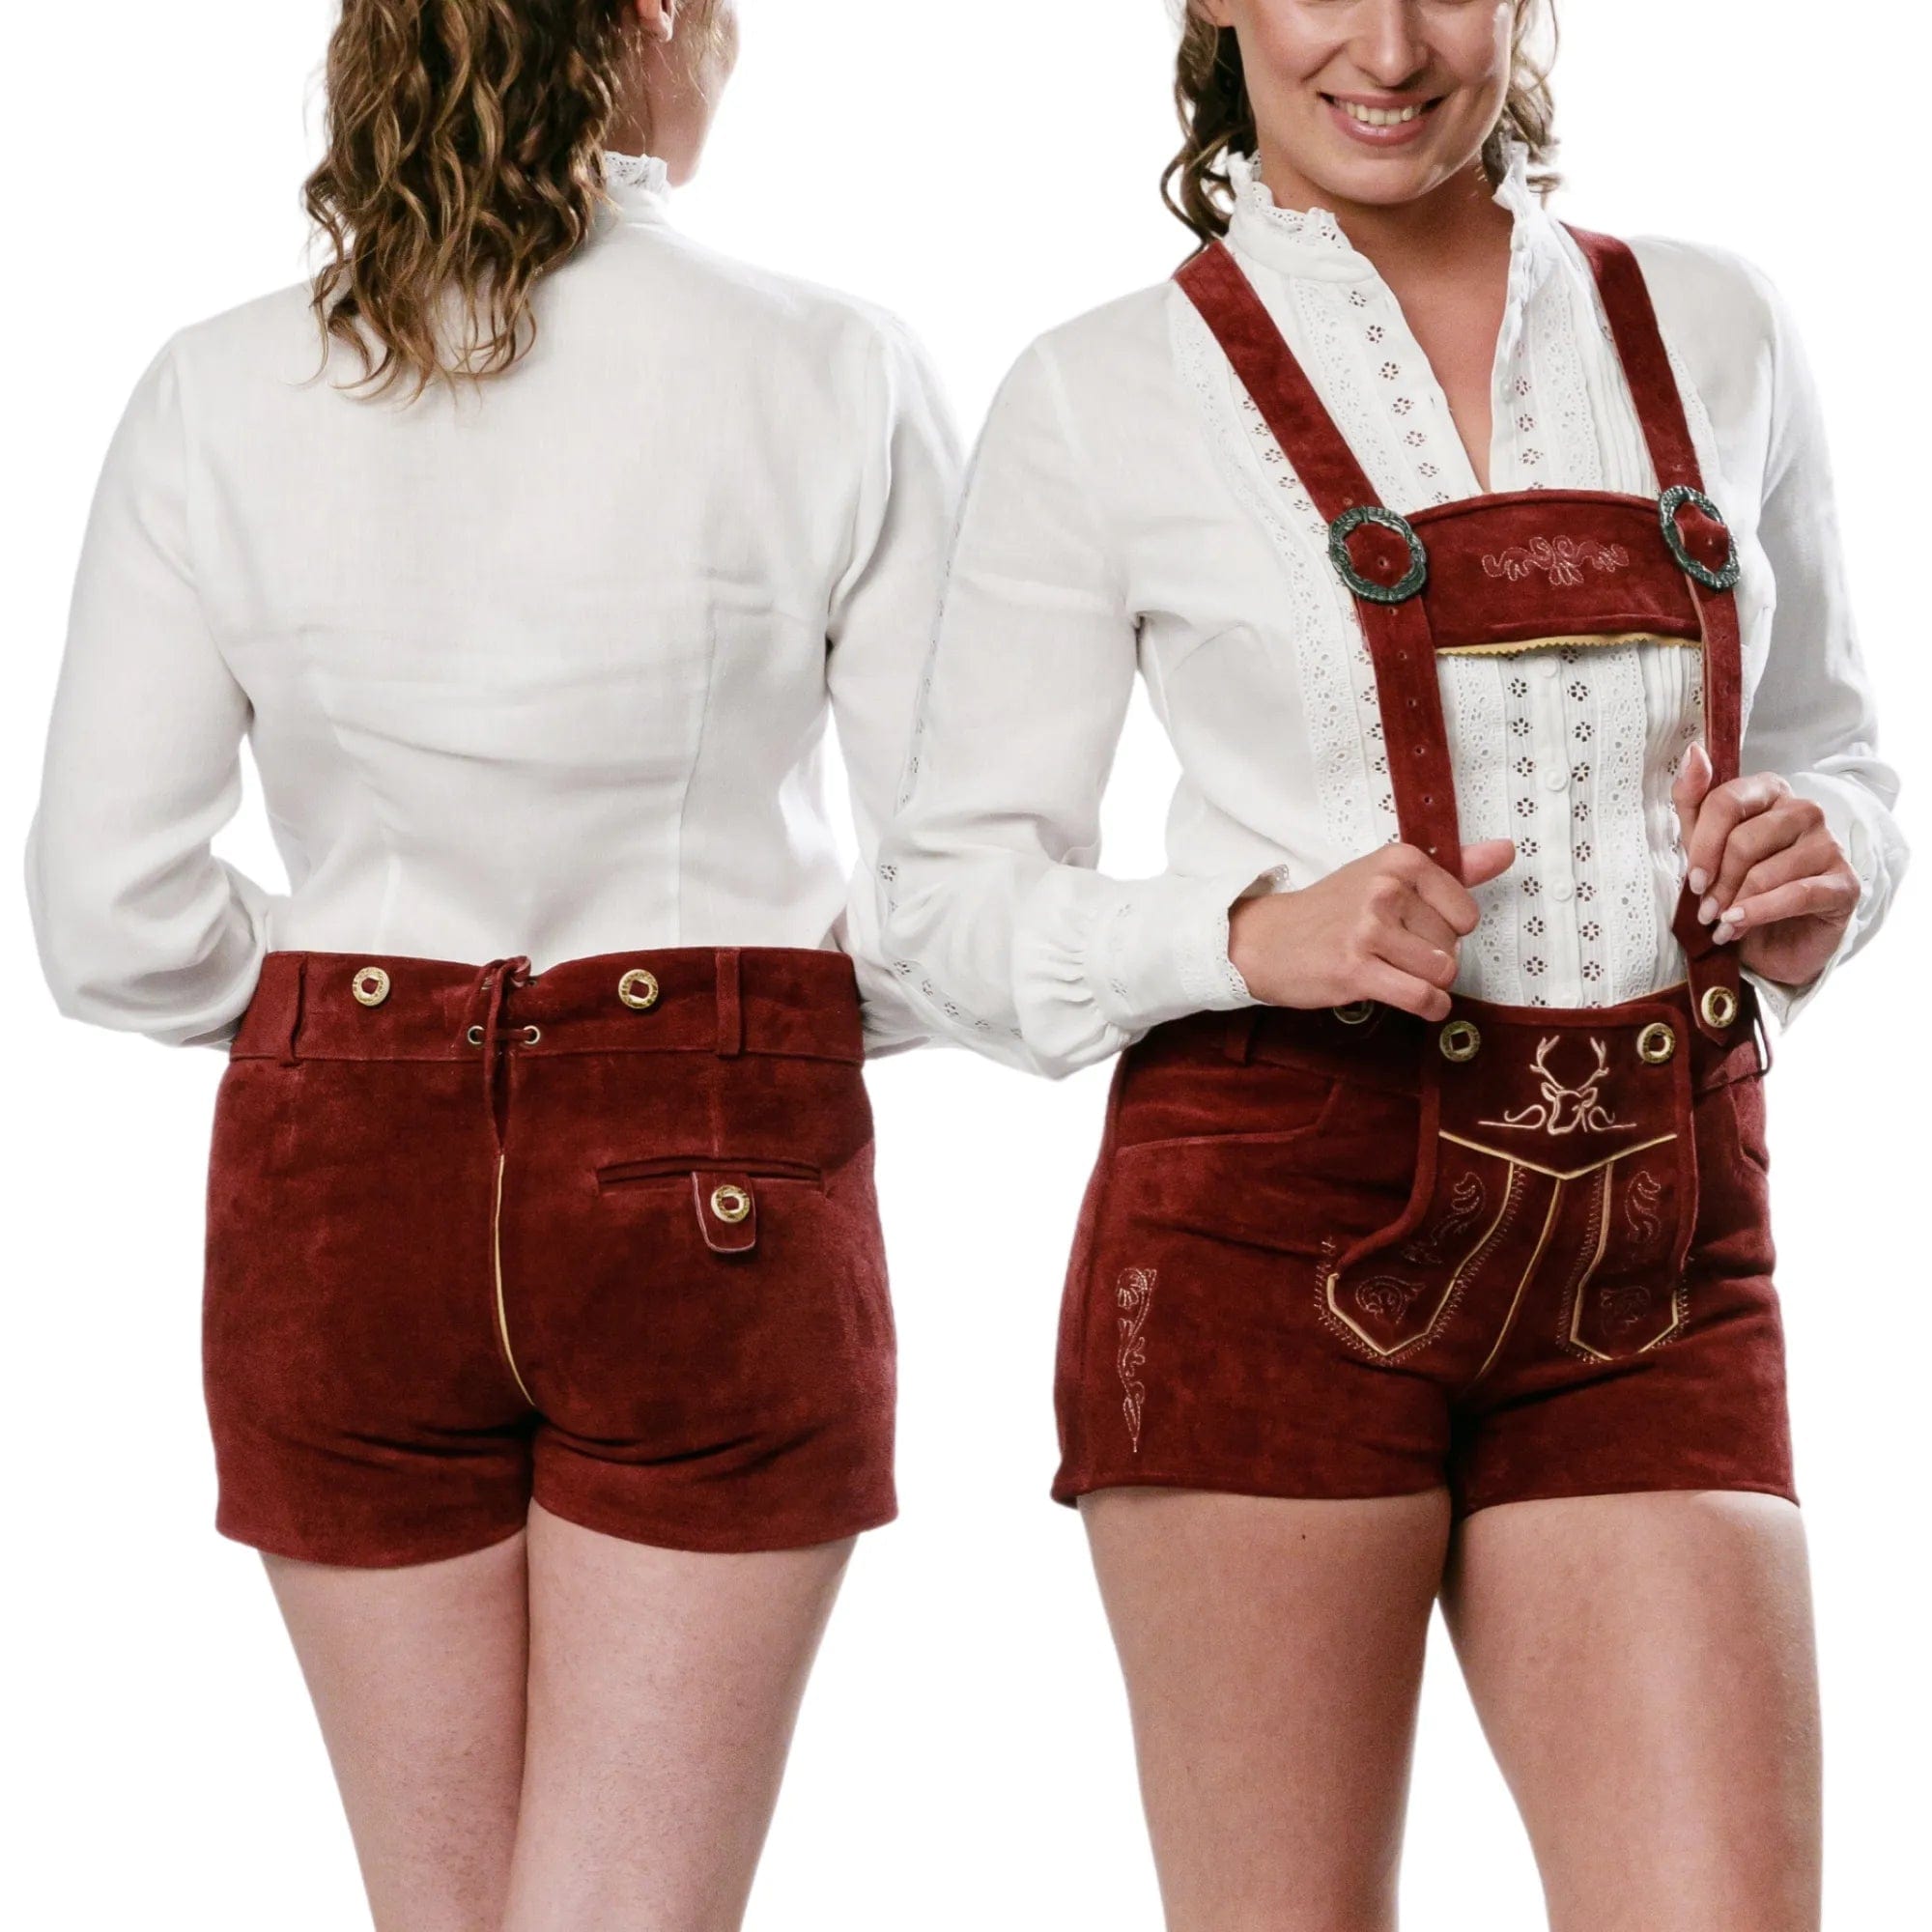 Bavaria Trachten Lederhosen Women Hotpant Cherry Red Oktoberfest 